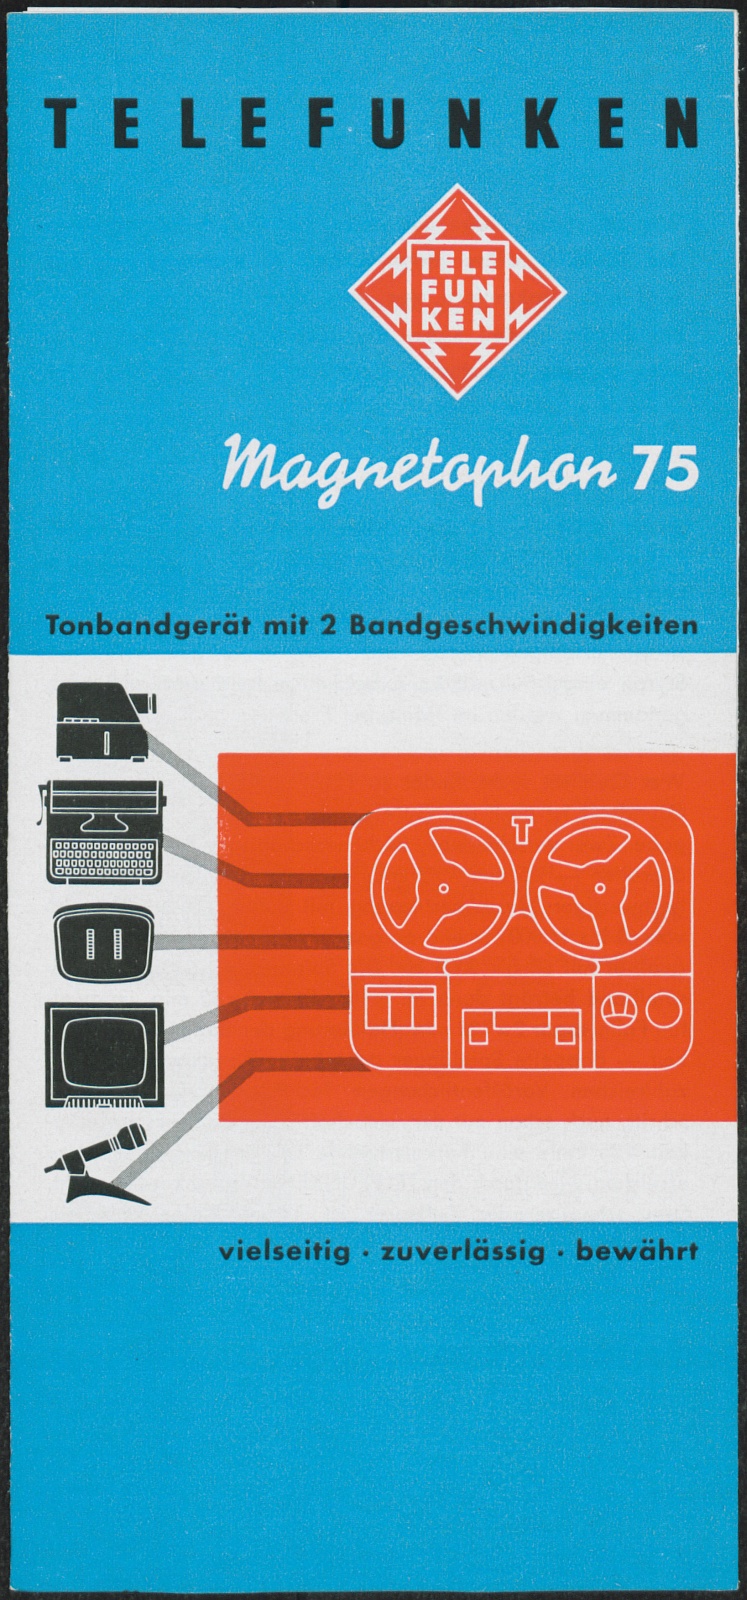 Werbeprospekt: Telefunken Magnetophon 75 (Stiftung Deutsches Technikmuseum Berlin CC0)